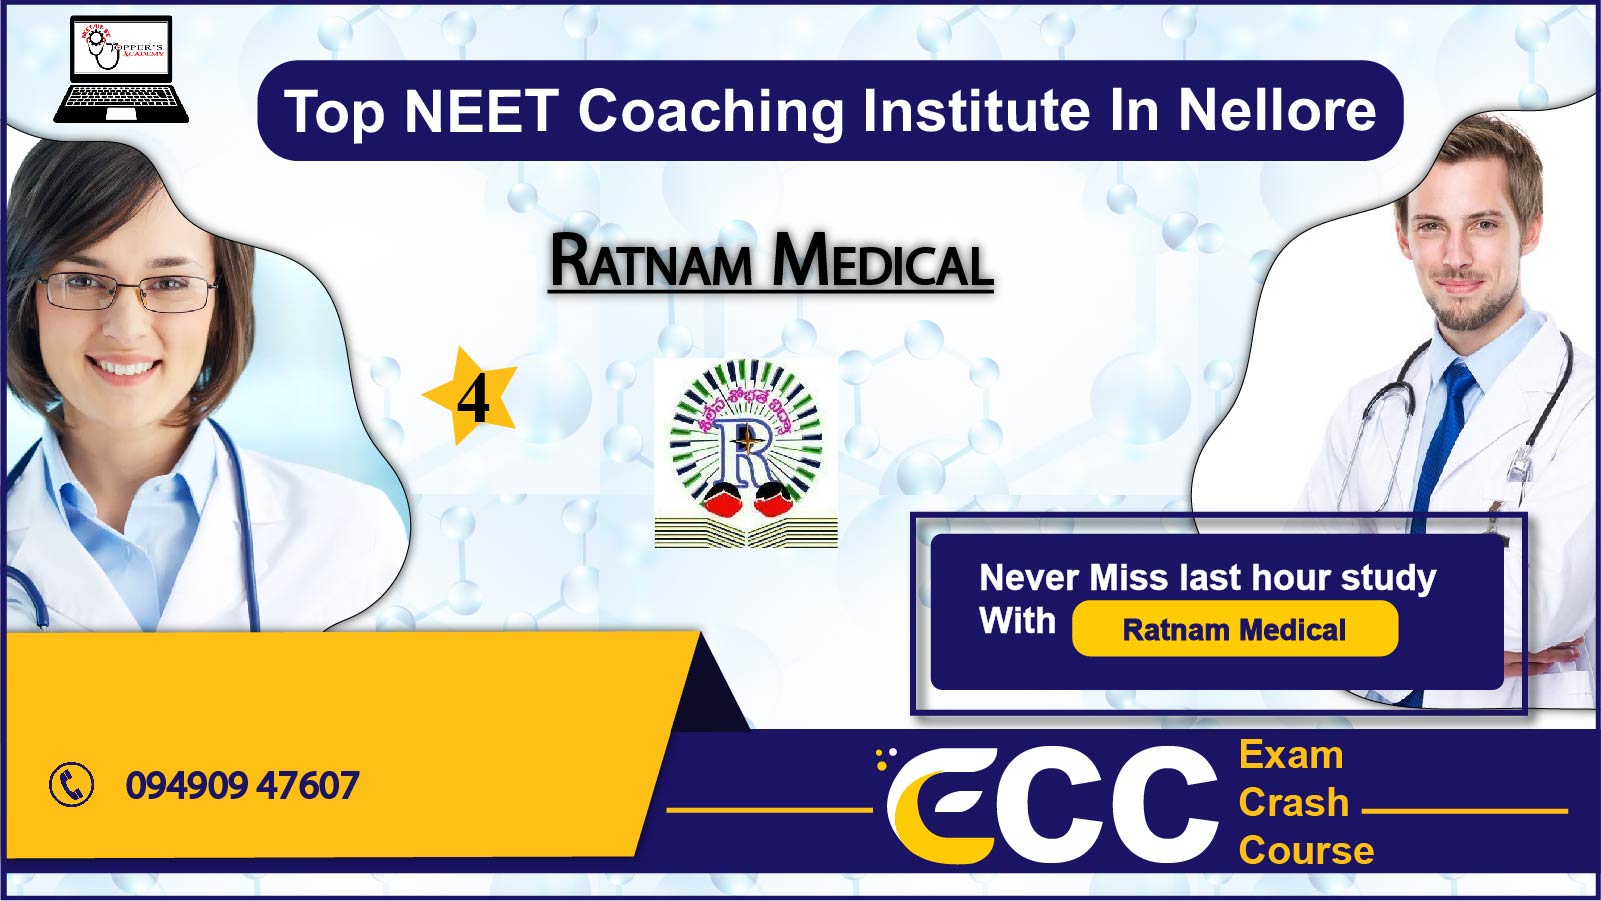 Ratnam Medical Academy in Nellore